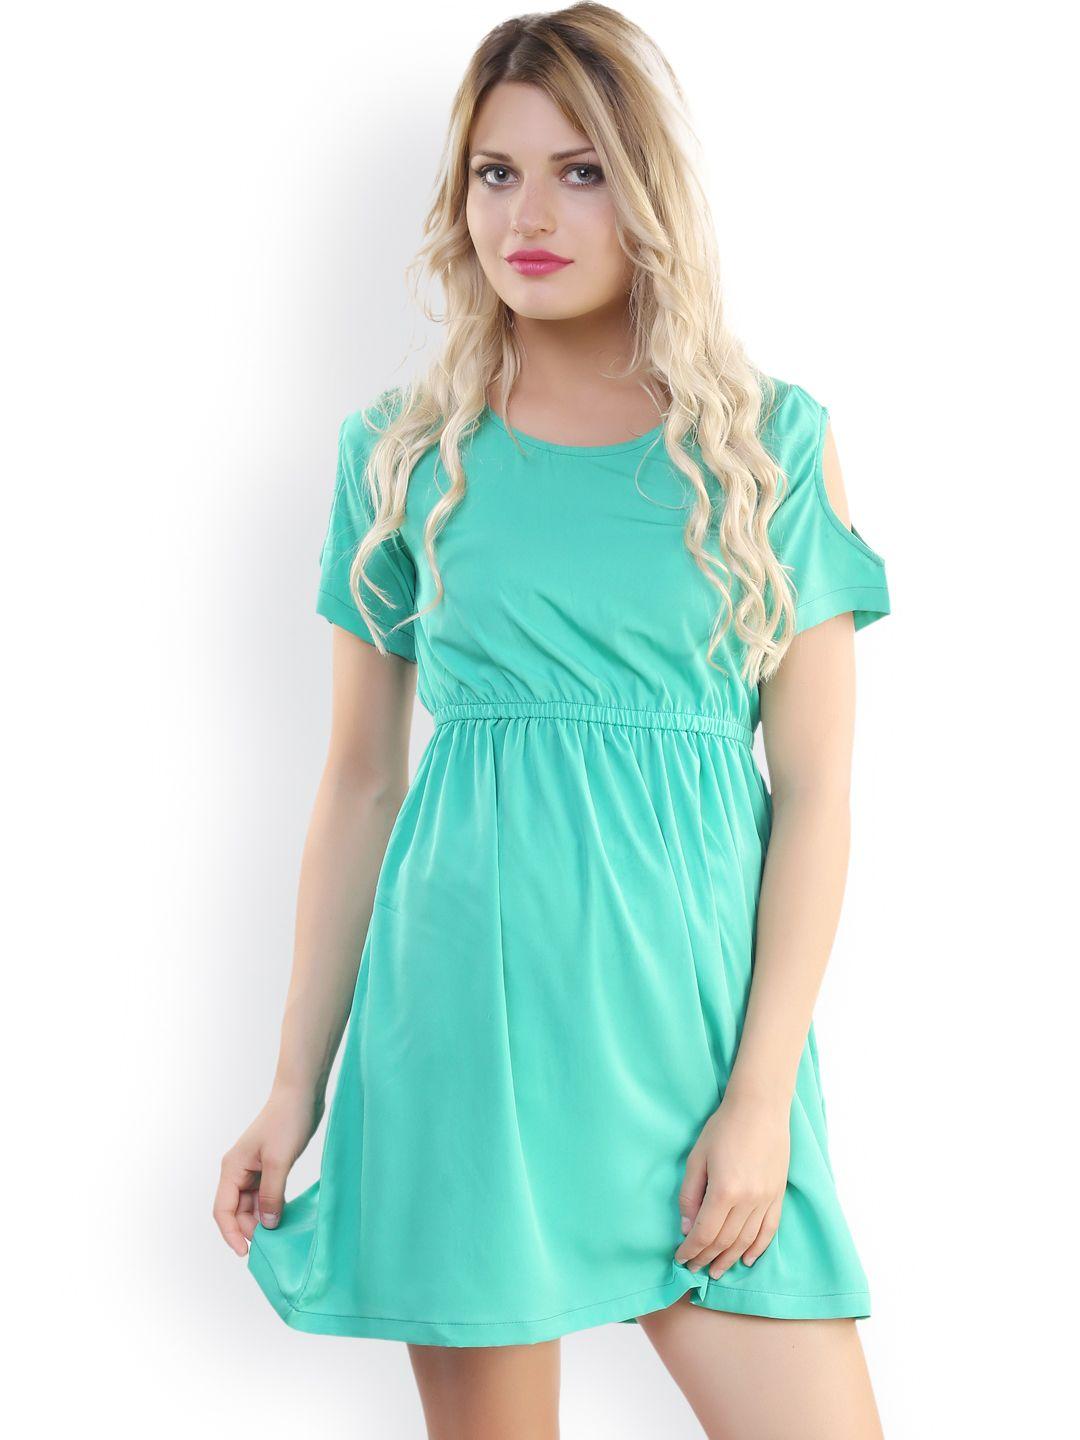 belle-fille-sea-green-fit-&-flare-dress